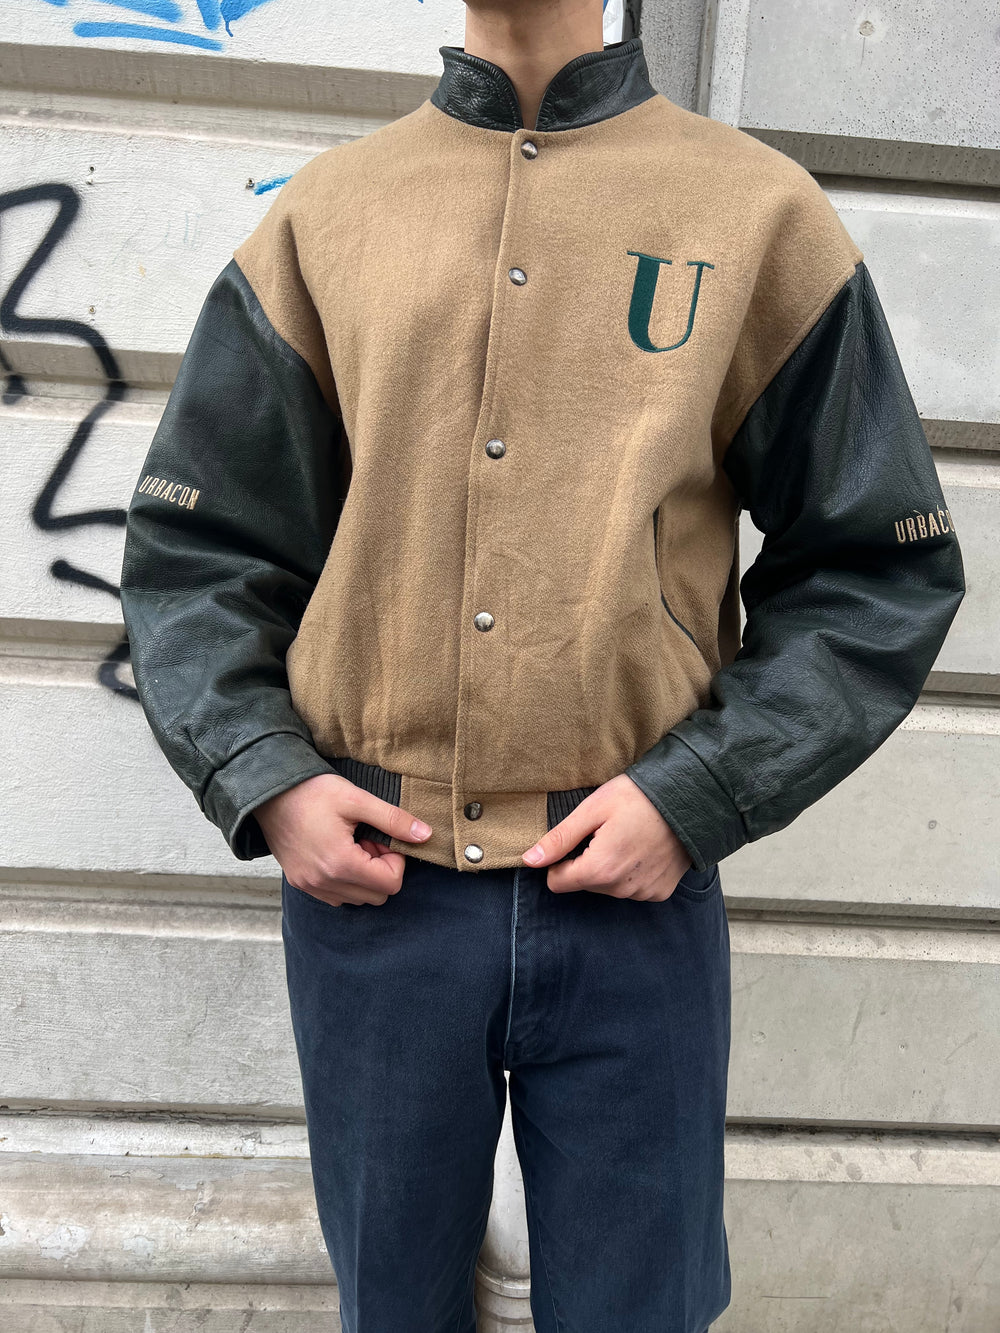 Vintage Varsity 90s College Urbacon Jacket (L)